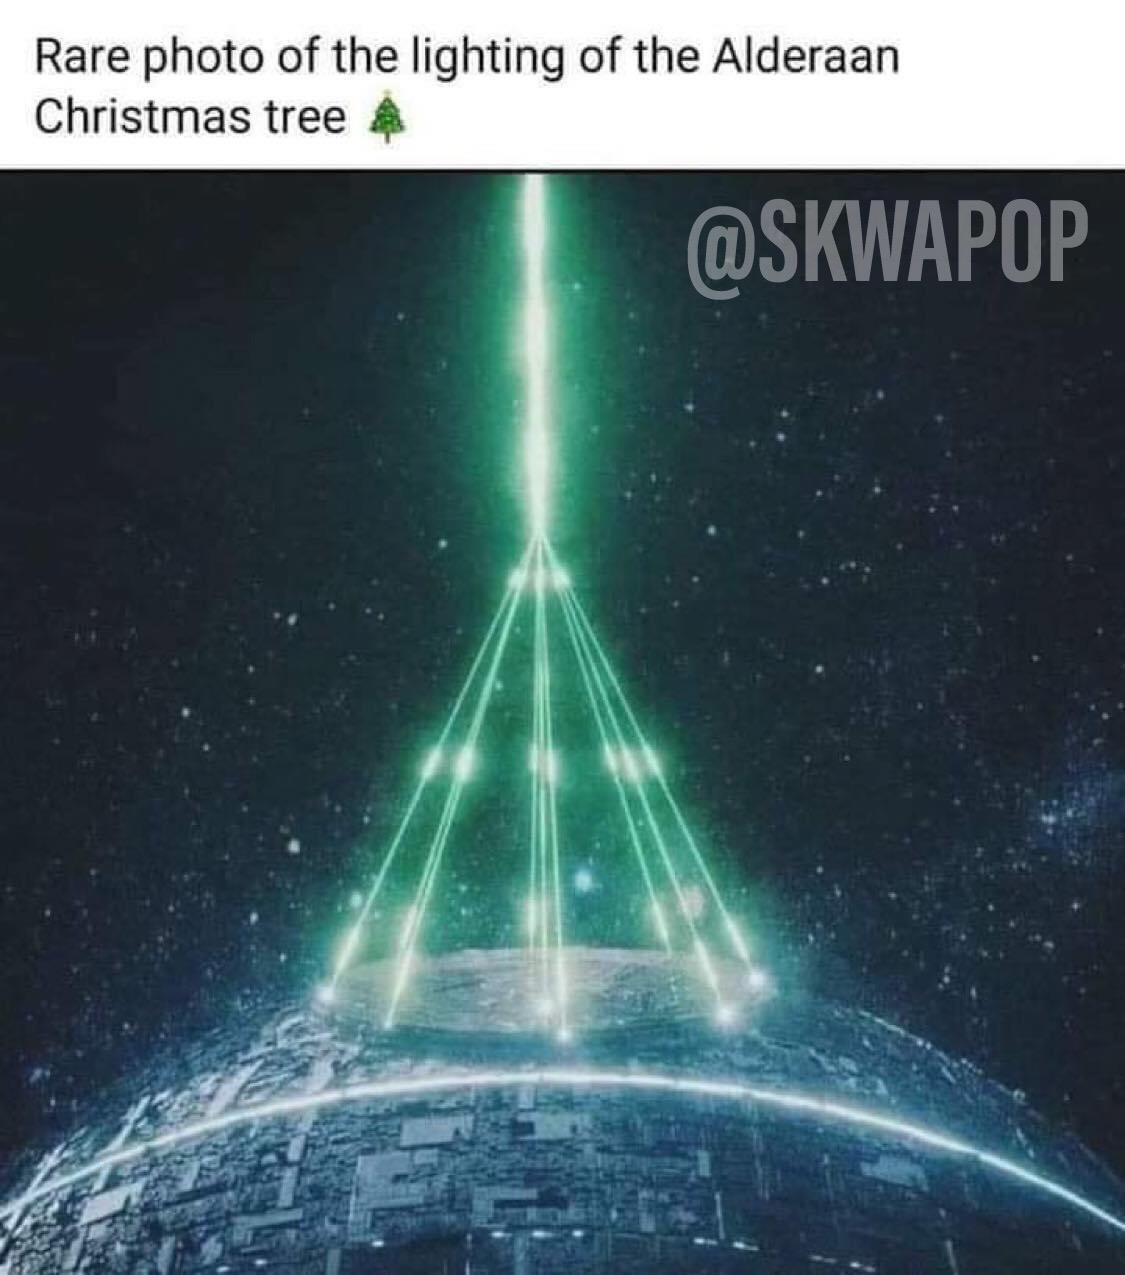 star wars death star fan art - Rare photo of the lighting of the Alderaan Christmas tree